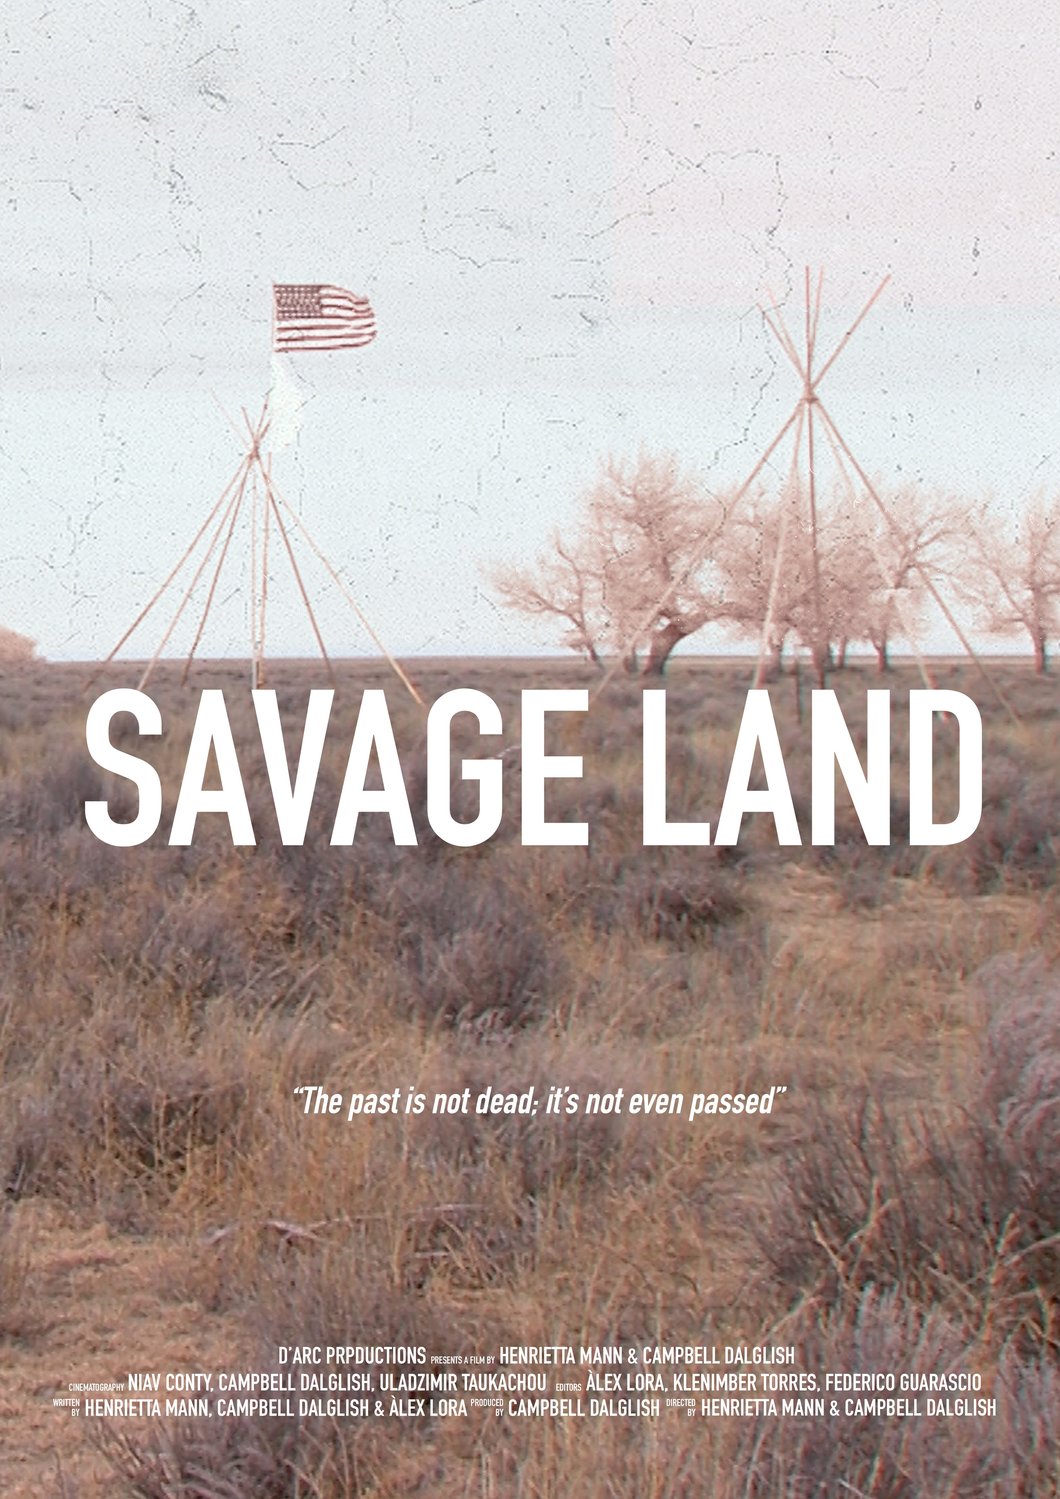 Film Poster for SAVAGE LAND